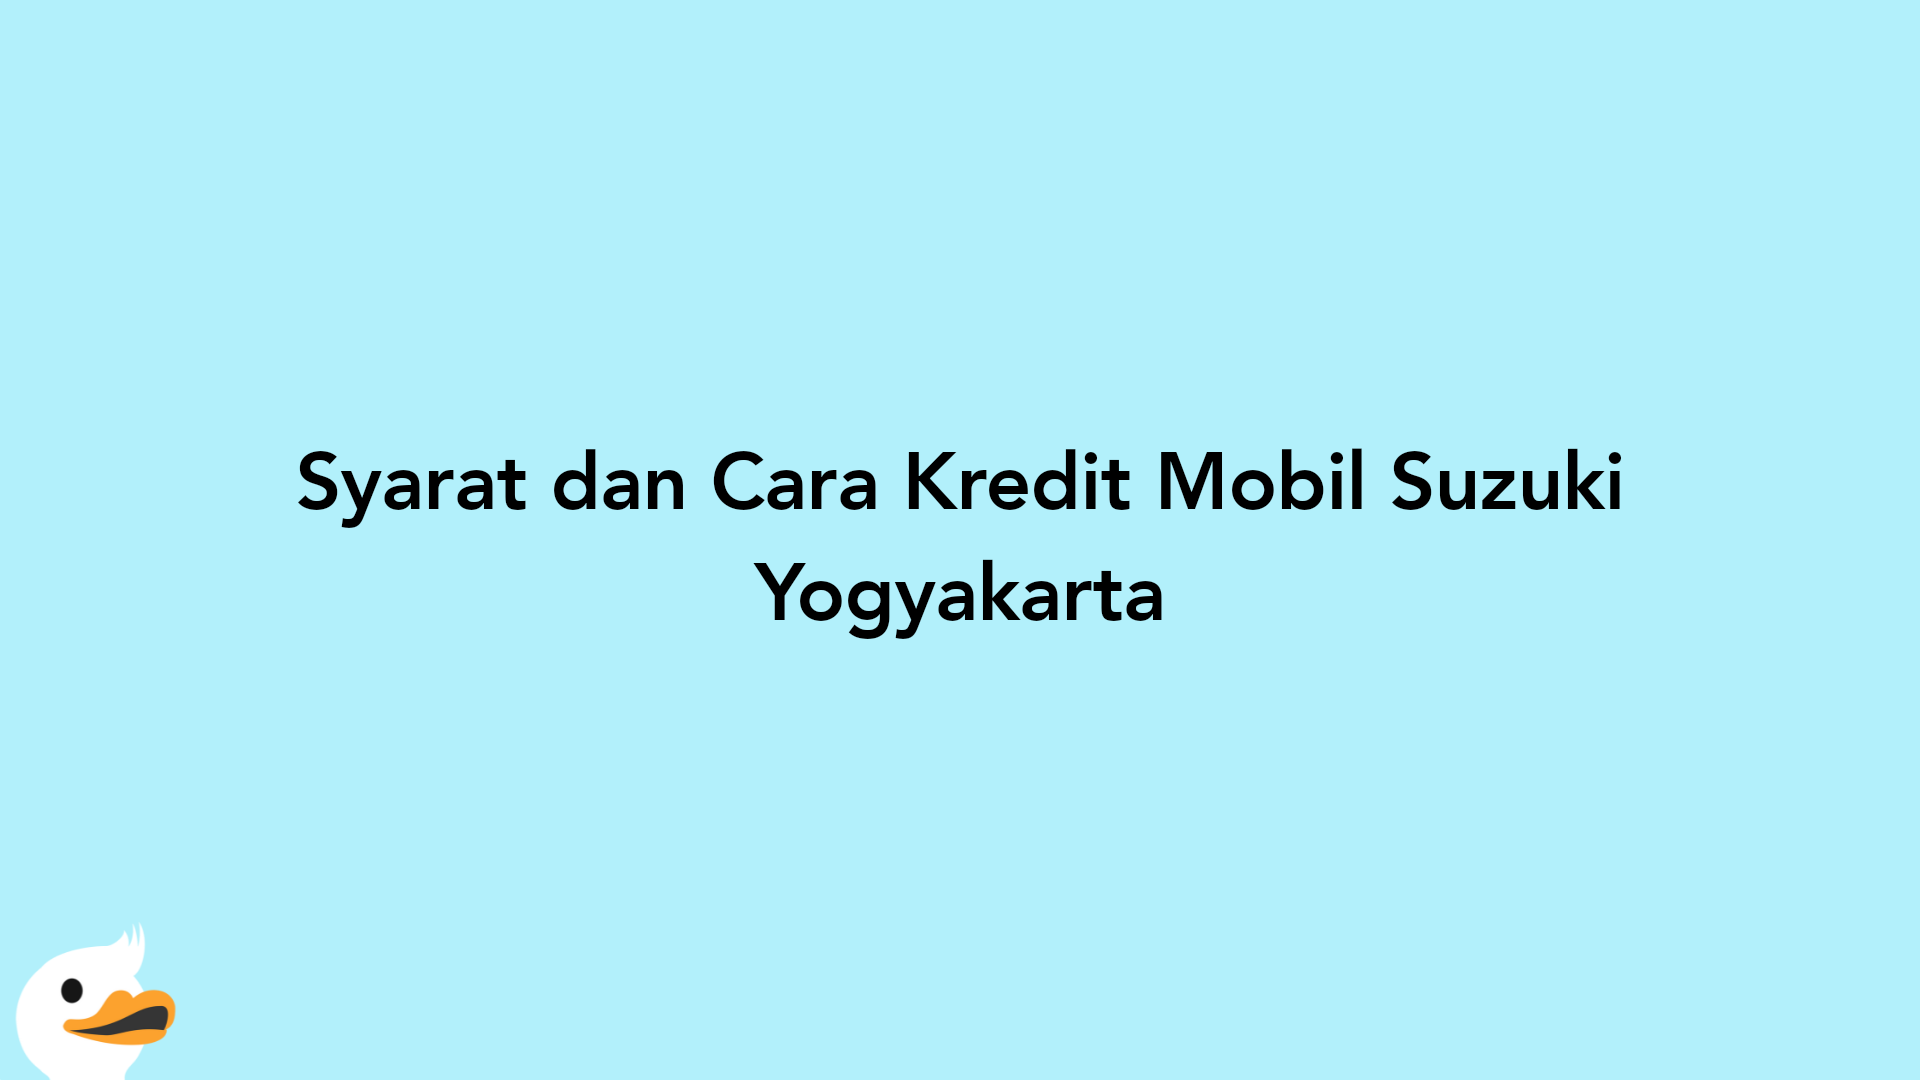 Syarat dan Cara Kredit Mobil Suzuki Yogyakarta